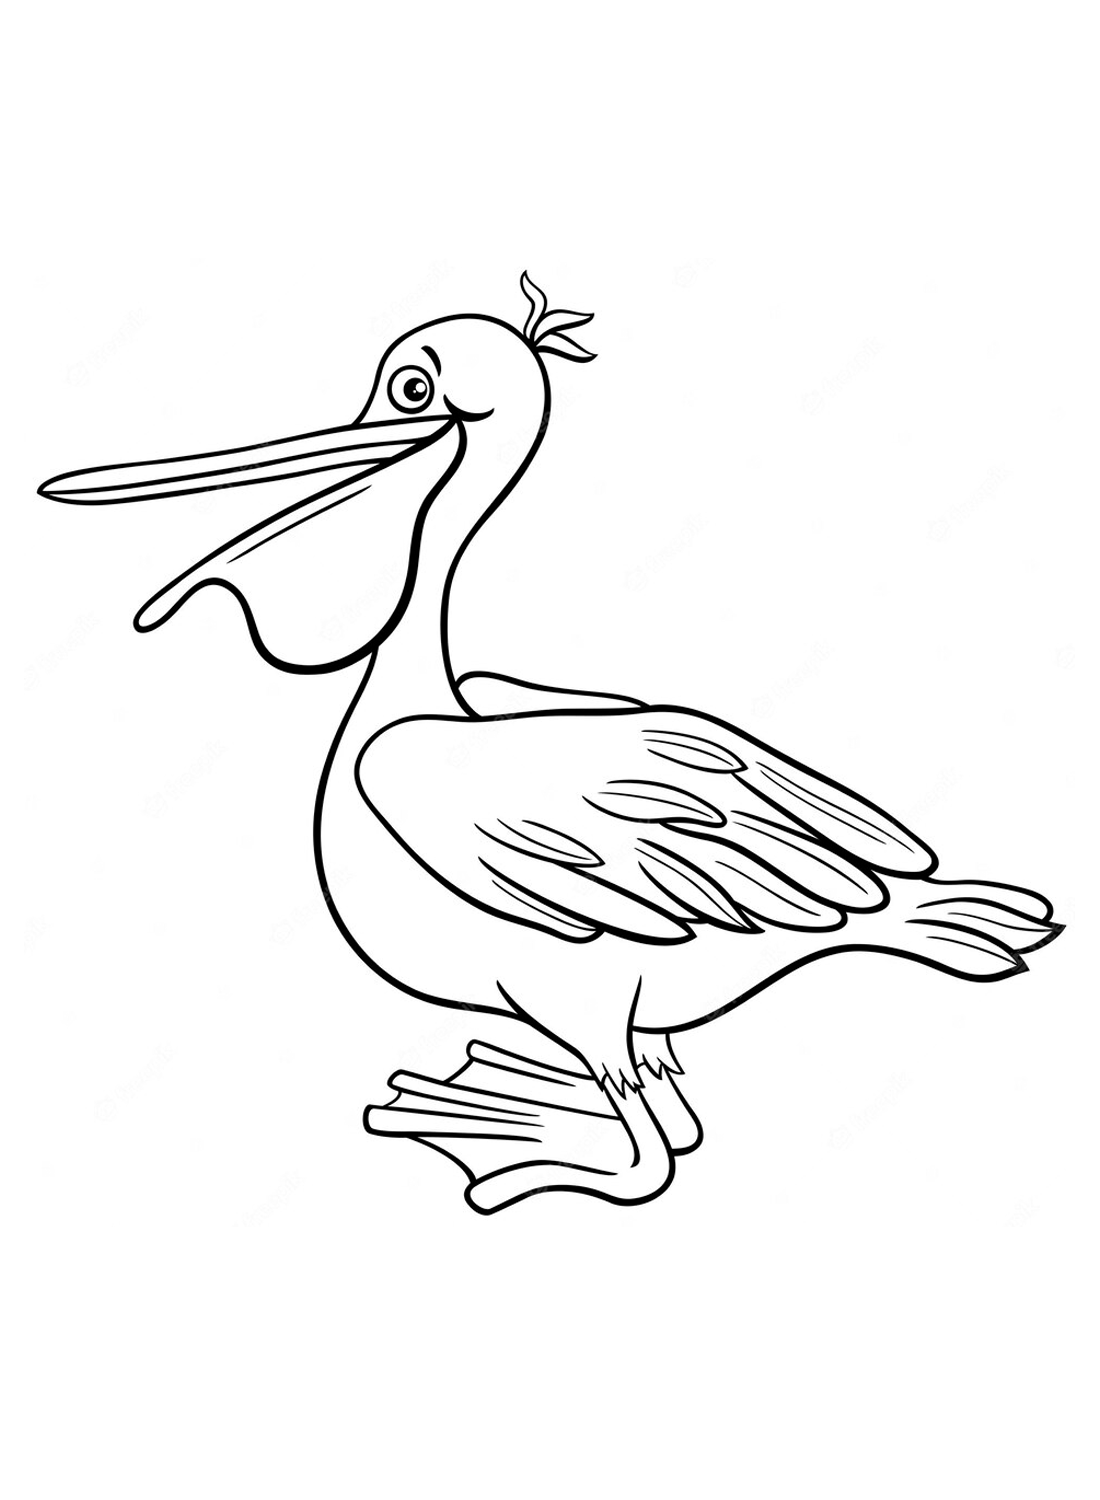 Pélican mignon et facile de Pelican